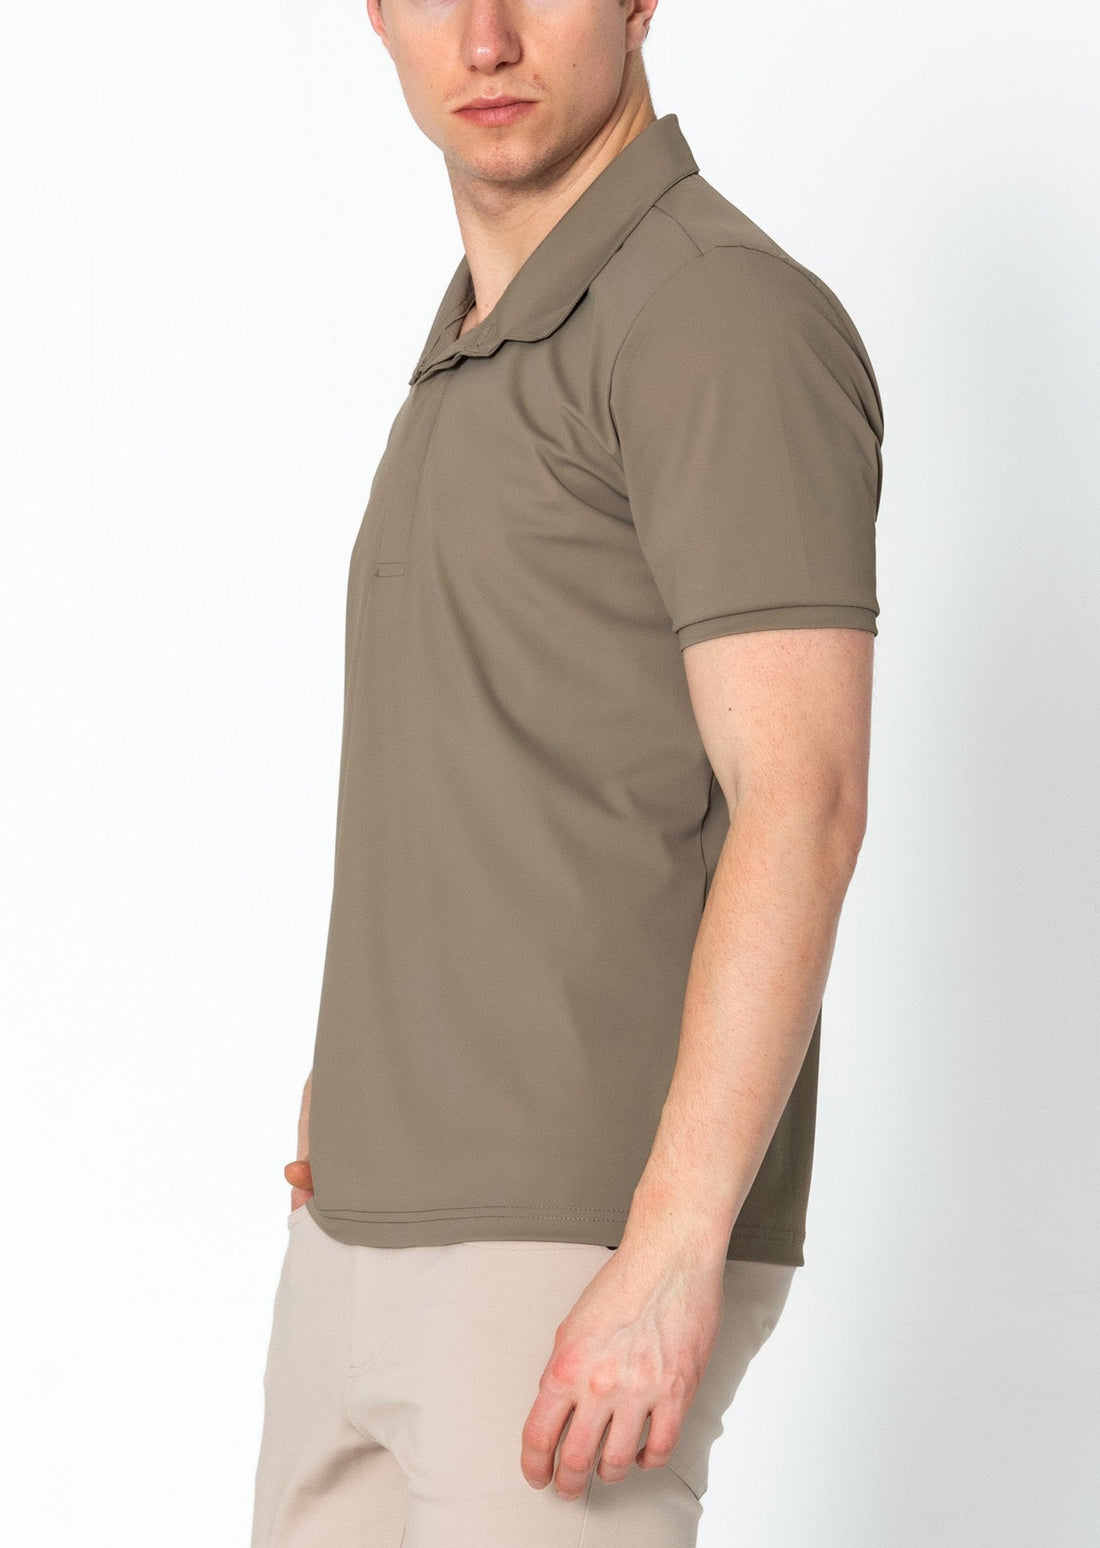 Wrinkle Free Tapered Travel Polo Shirts - Vizon